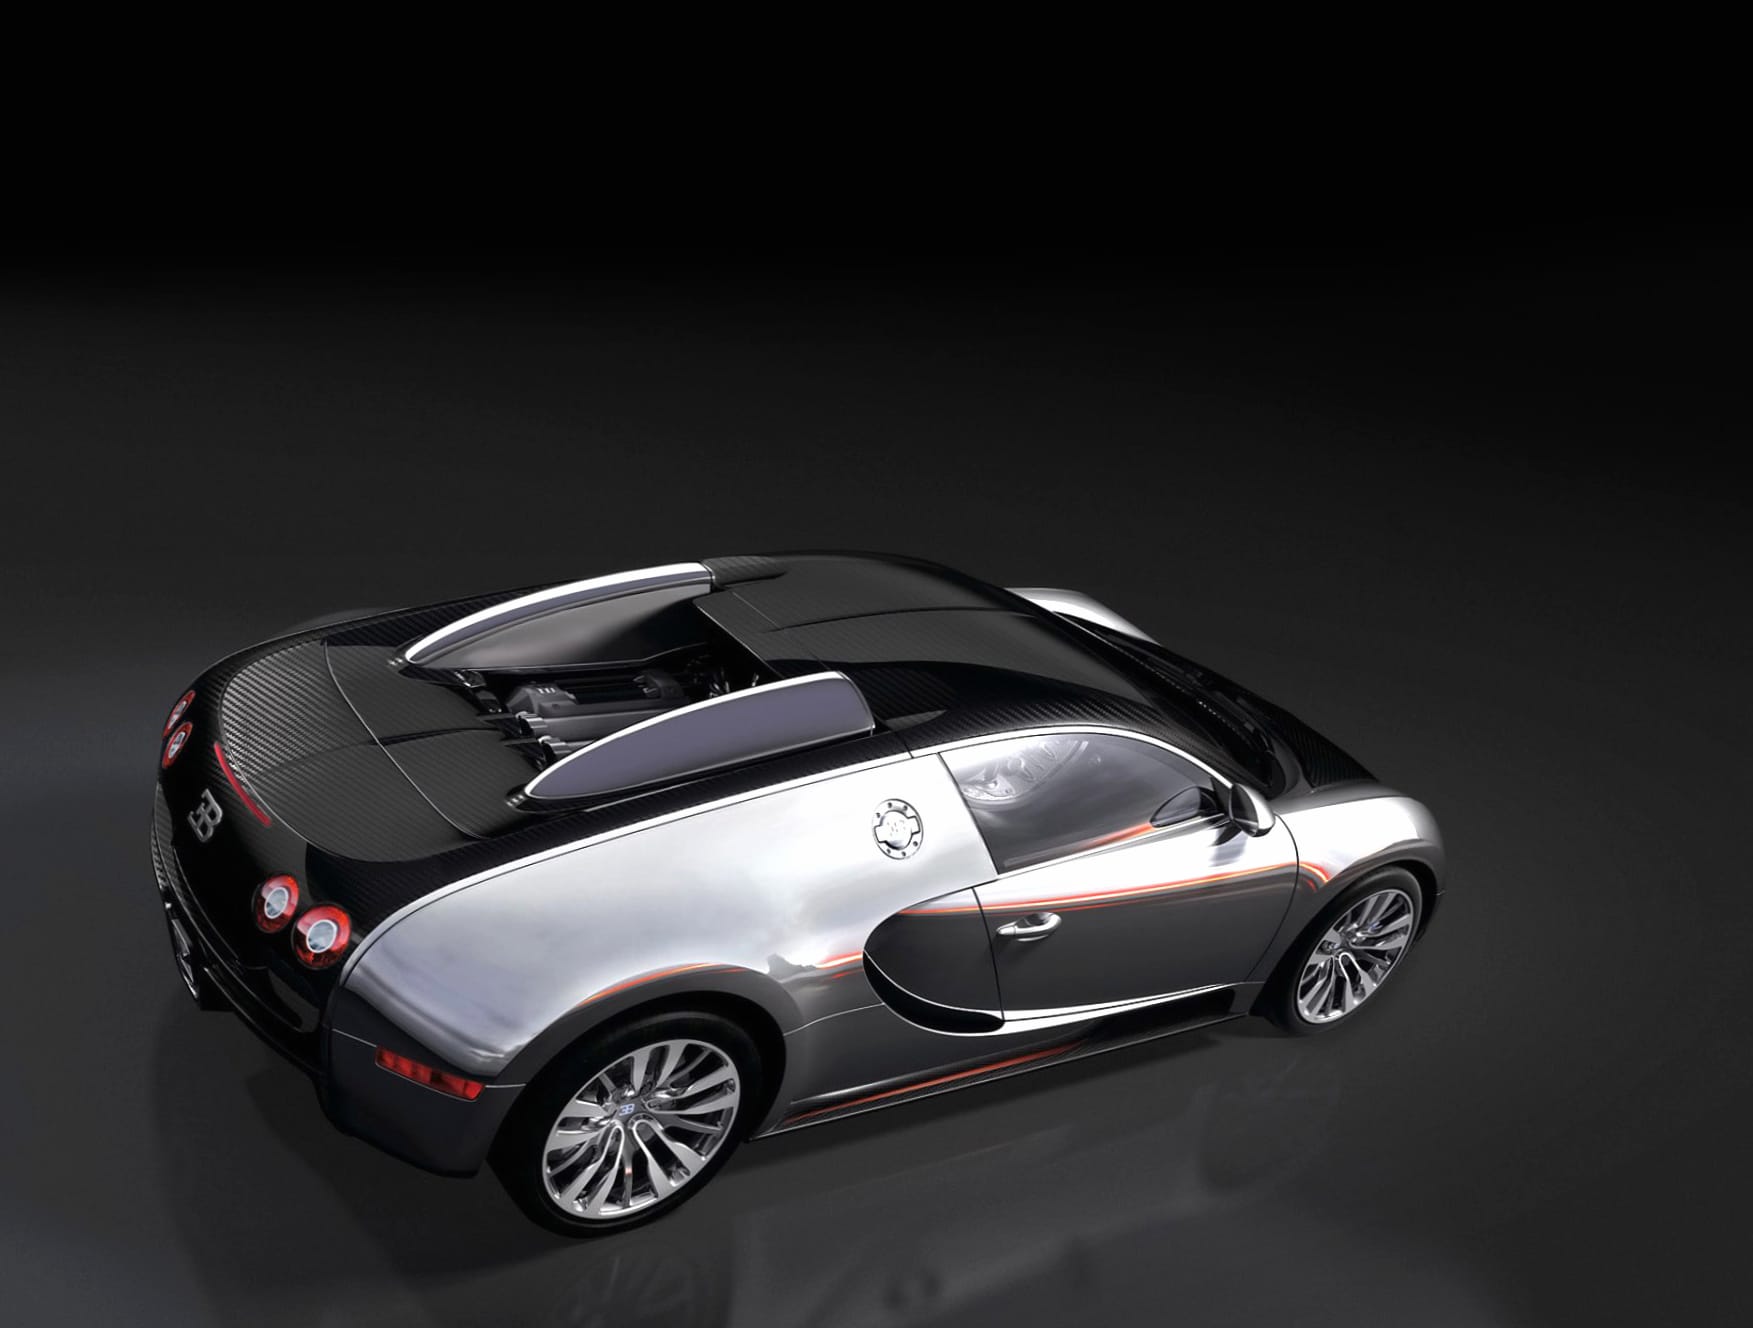 Bugatti Veyron 16-4 Pur Sang wallpapers HD quality